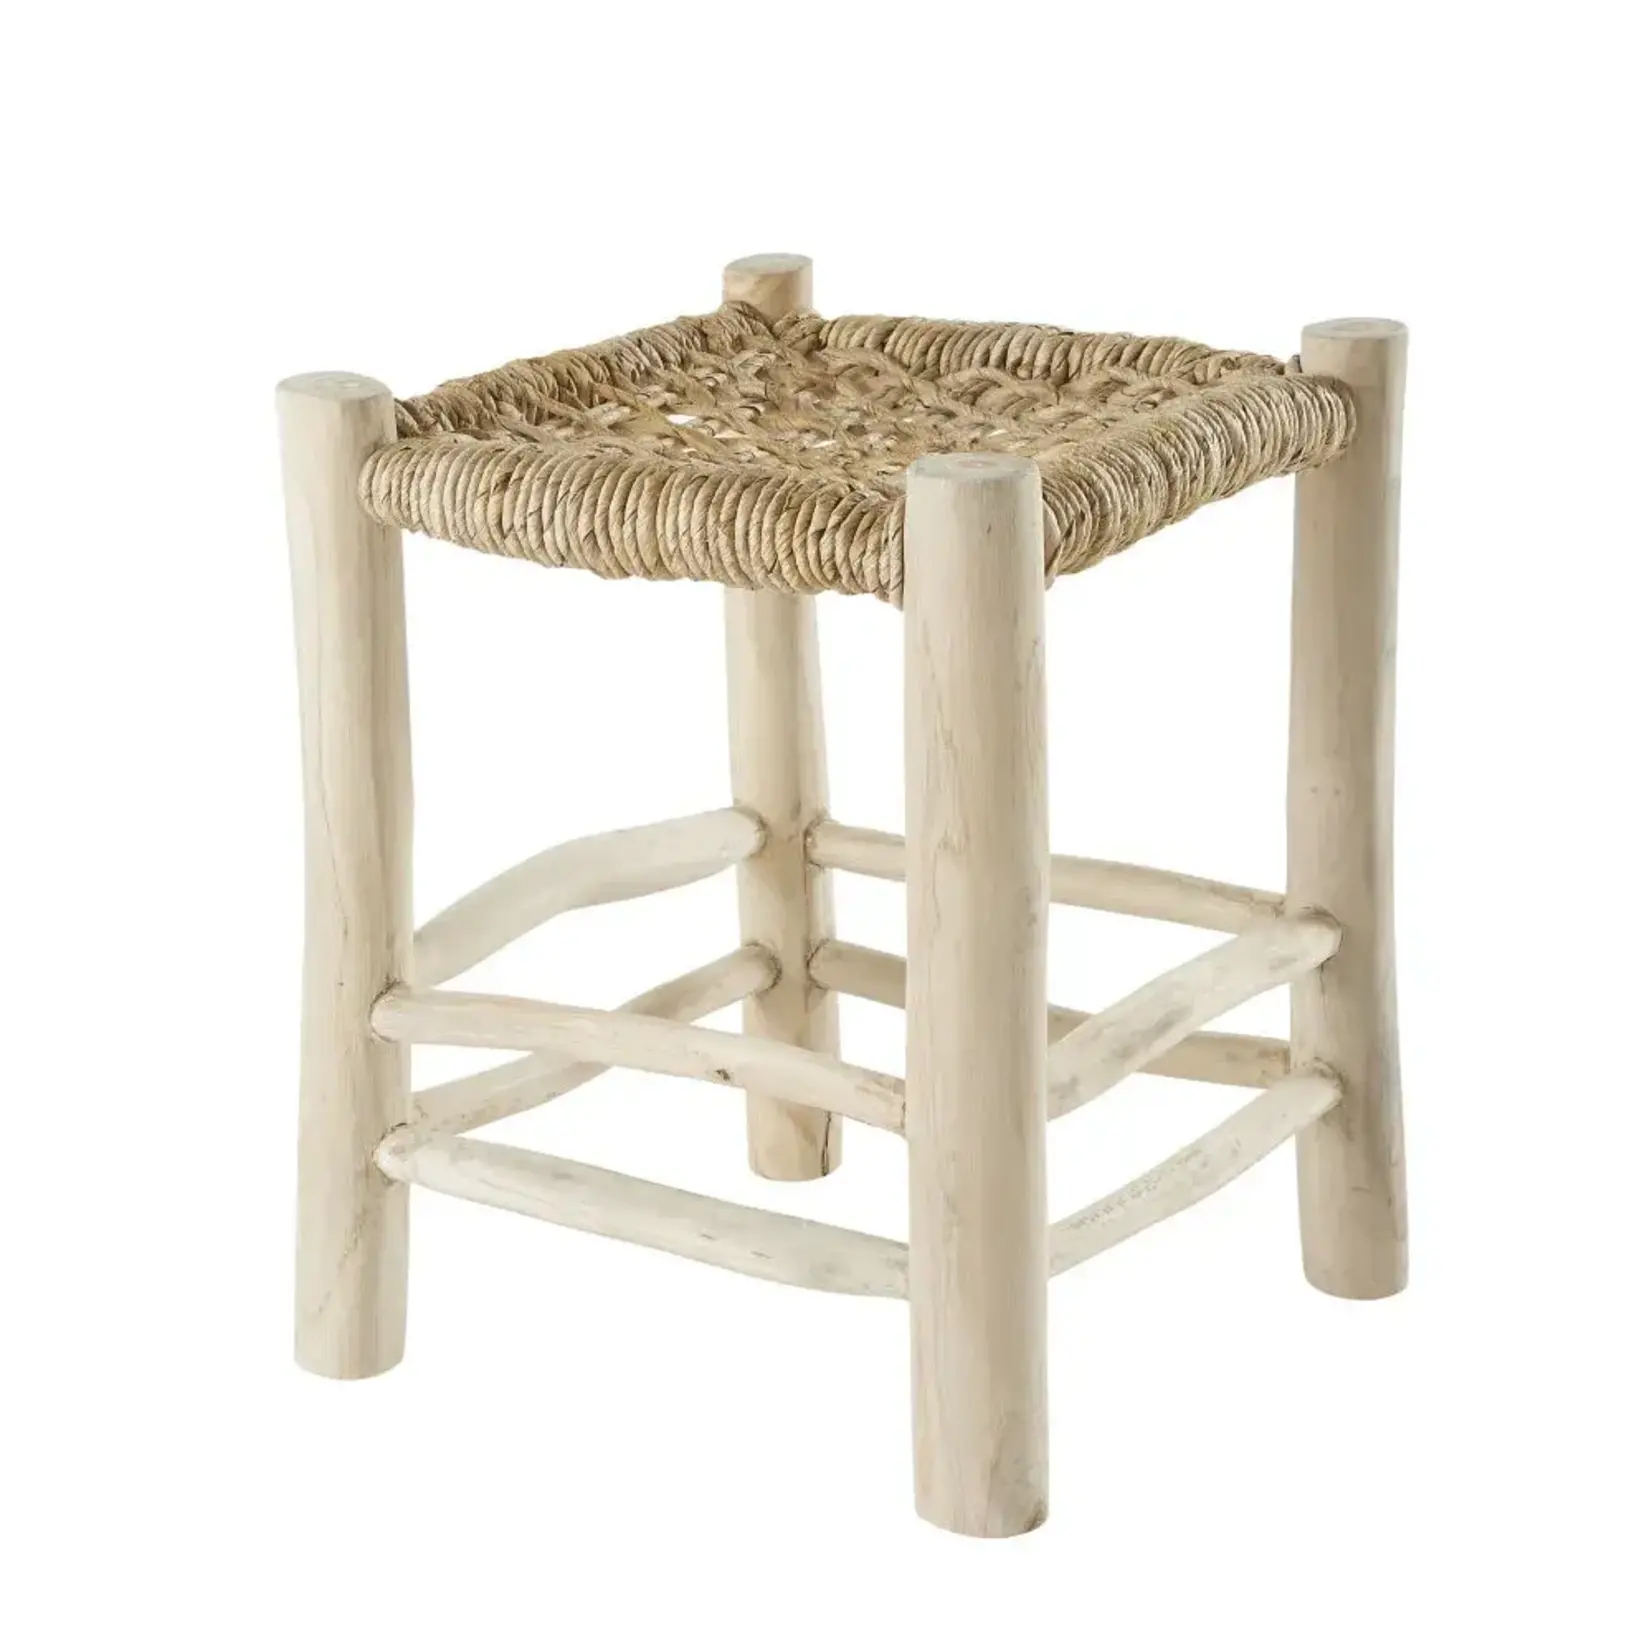 Patio wood naturel stool